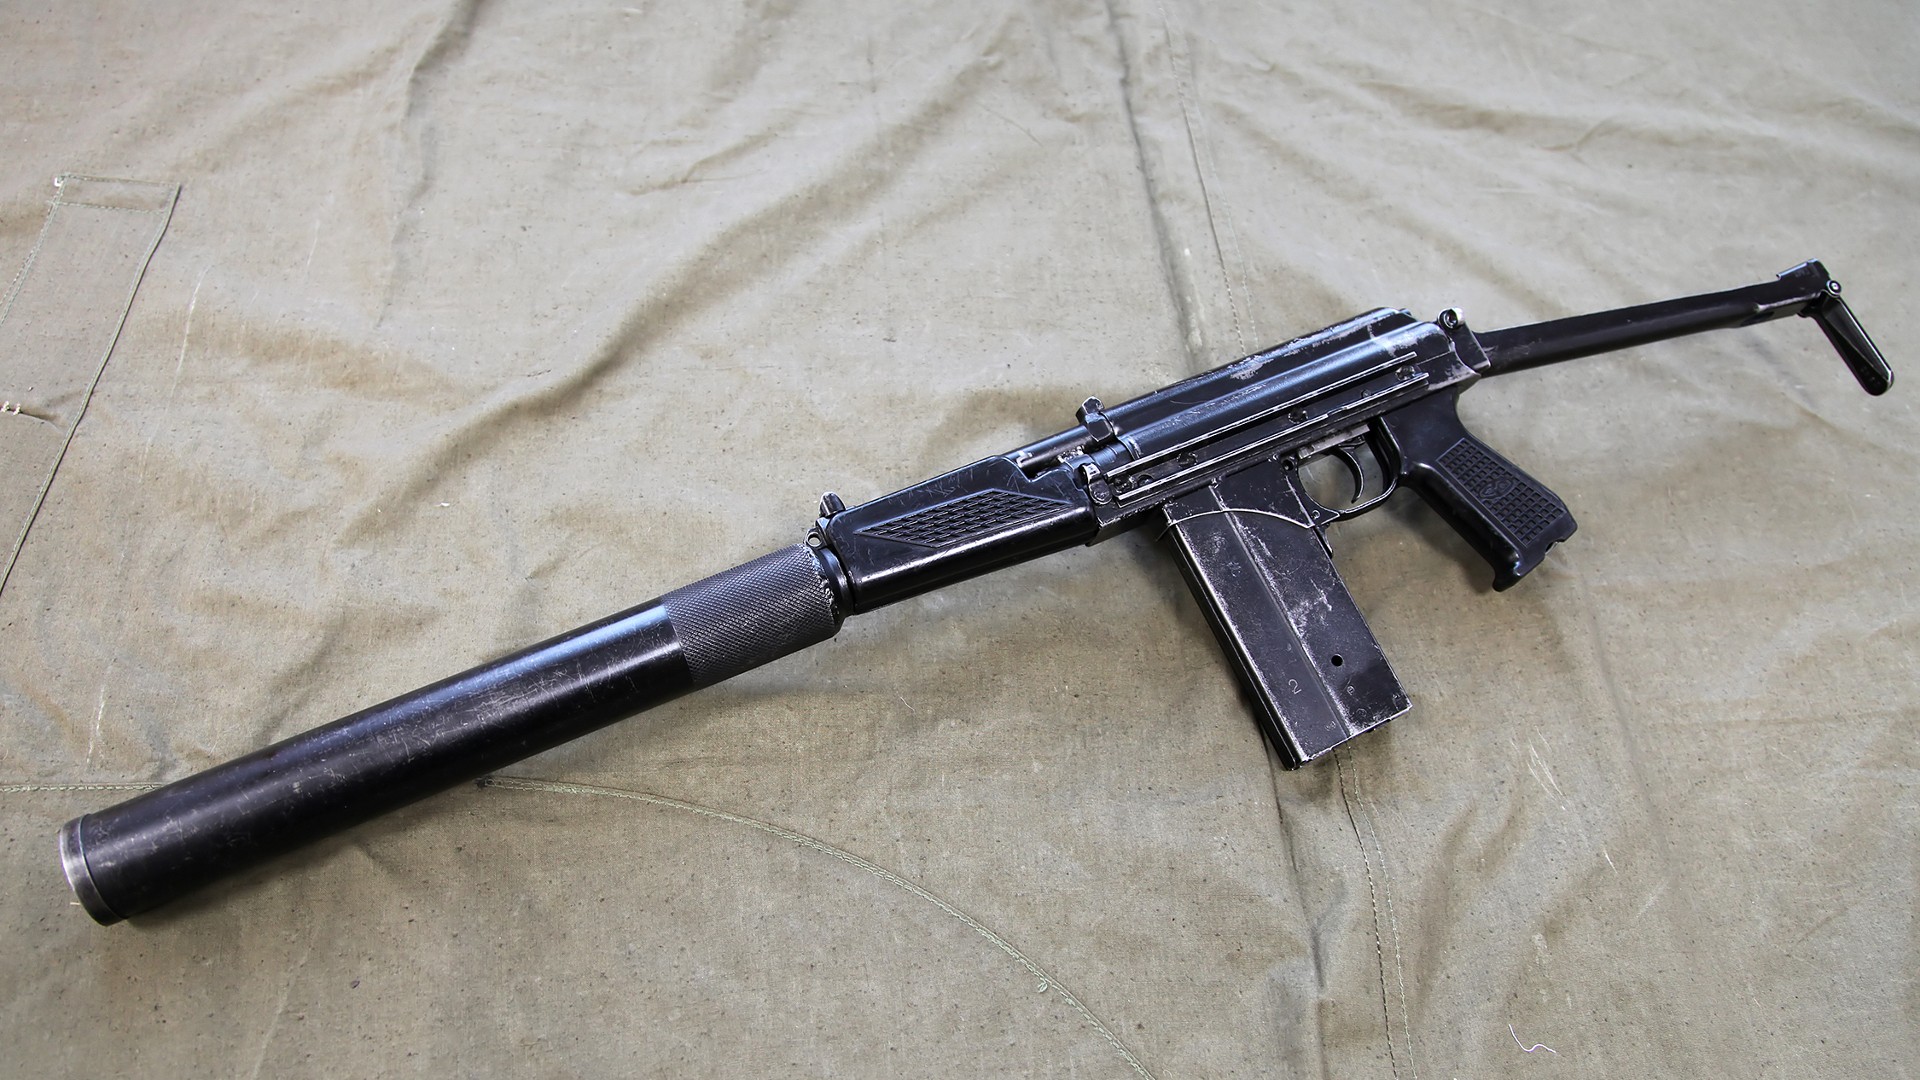 General 1920x1080 gun weapon 9A-91 suppressors Russian/Soviet firearms carbine